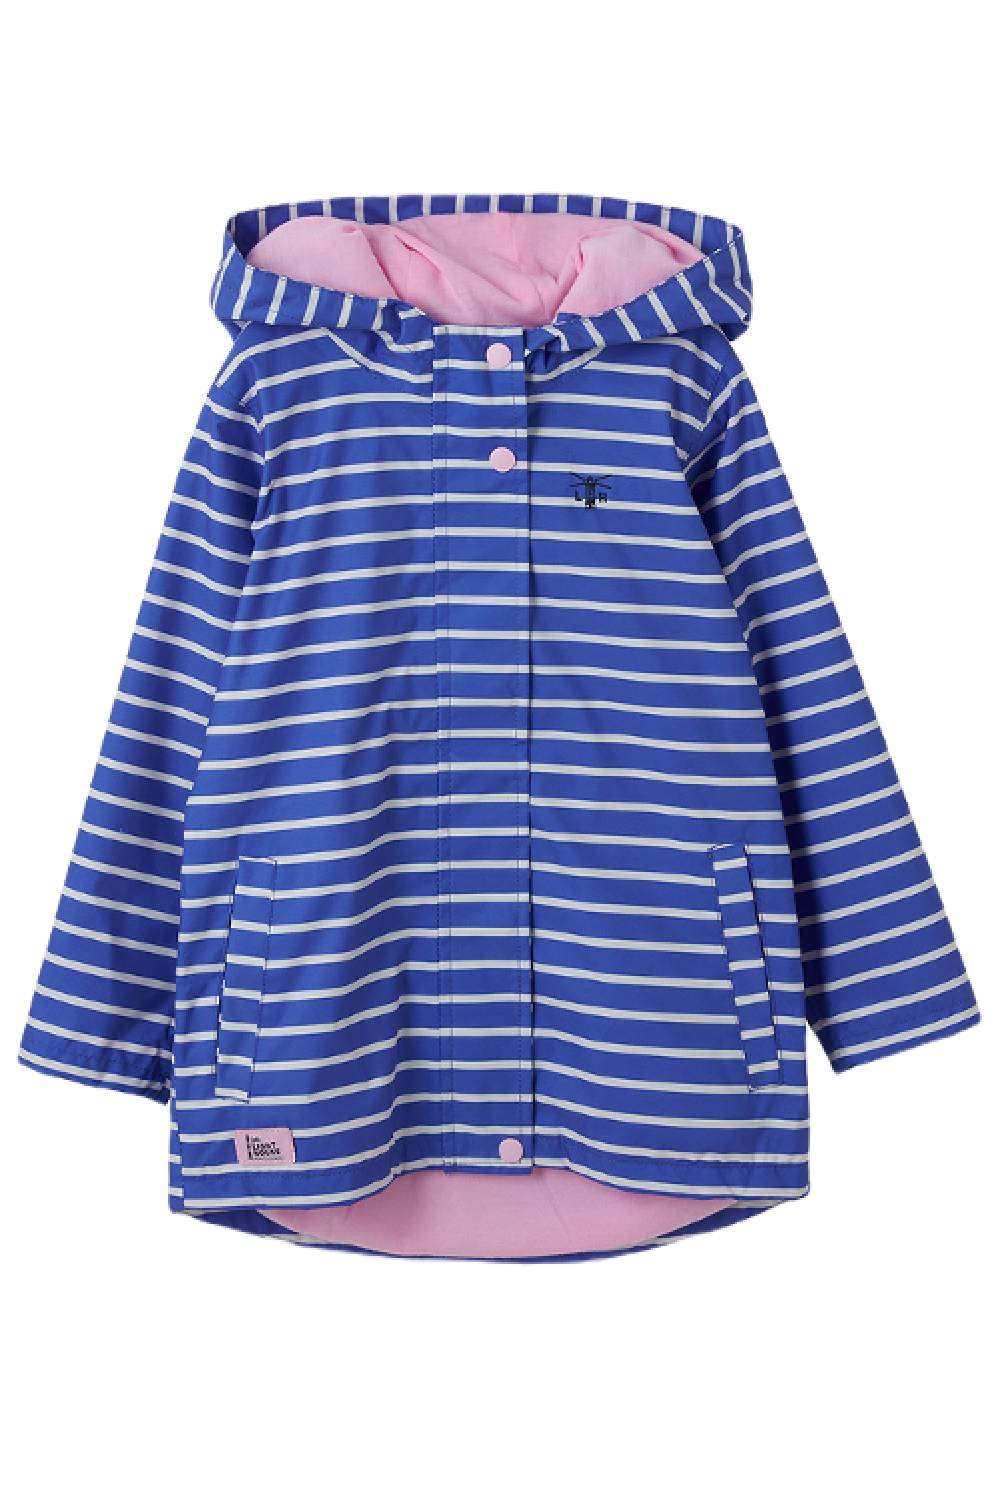 Lighthouse Girls Olivia Waterproof Jacket in Parma Violet Stripe 